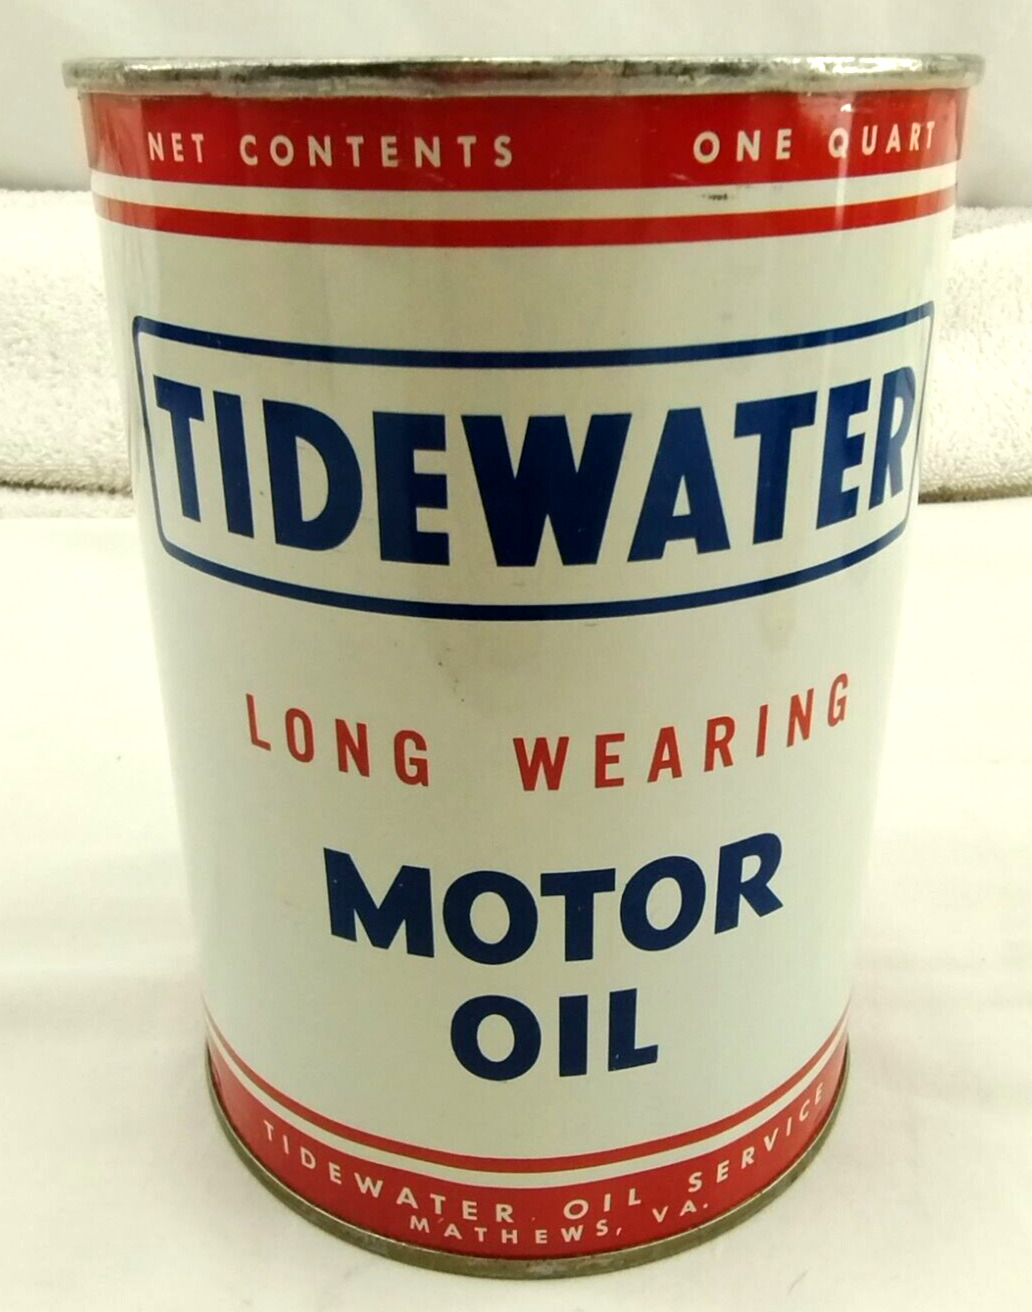 Vintage TIDEWATER Long Wearing Motor Oil 1 Quart Advertising Can